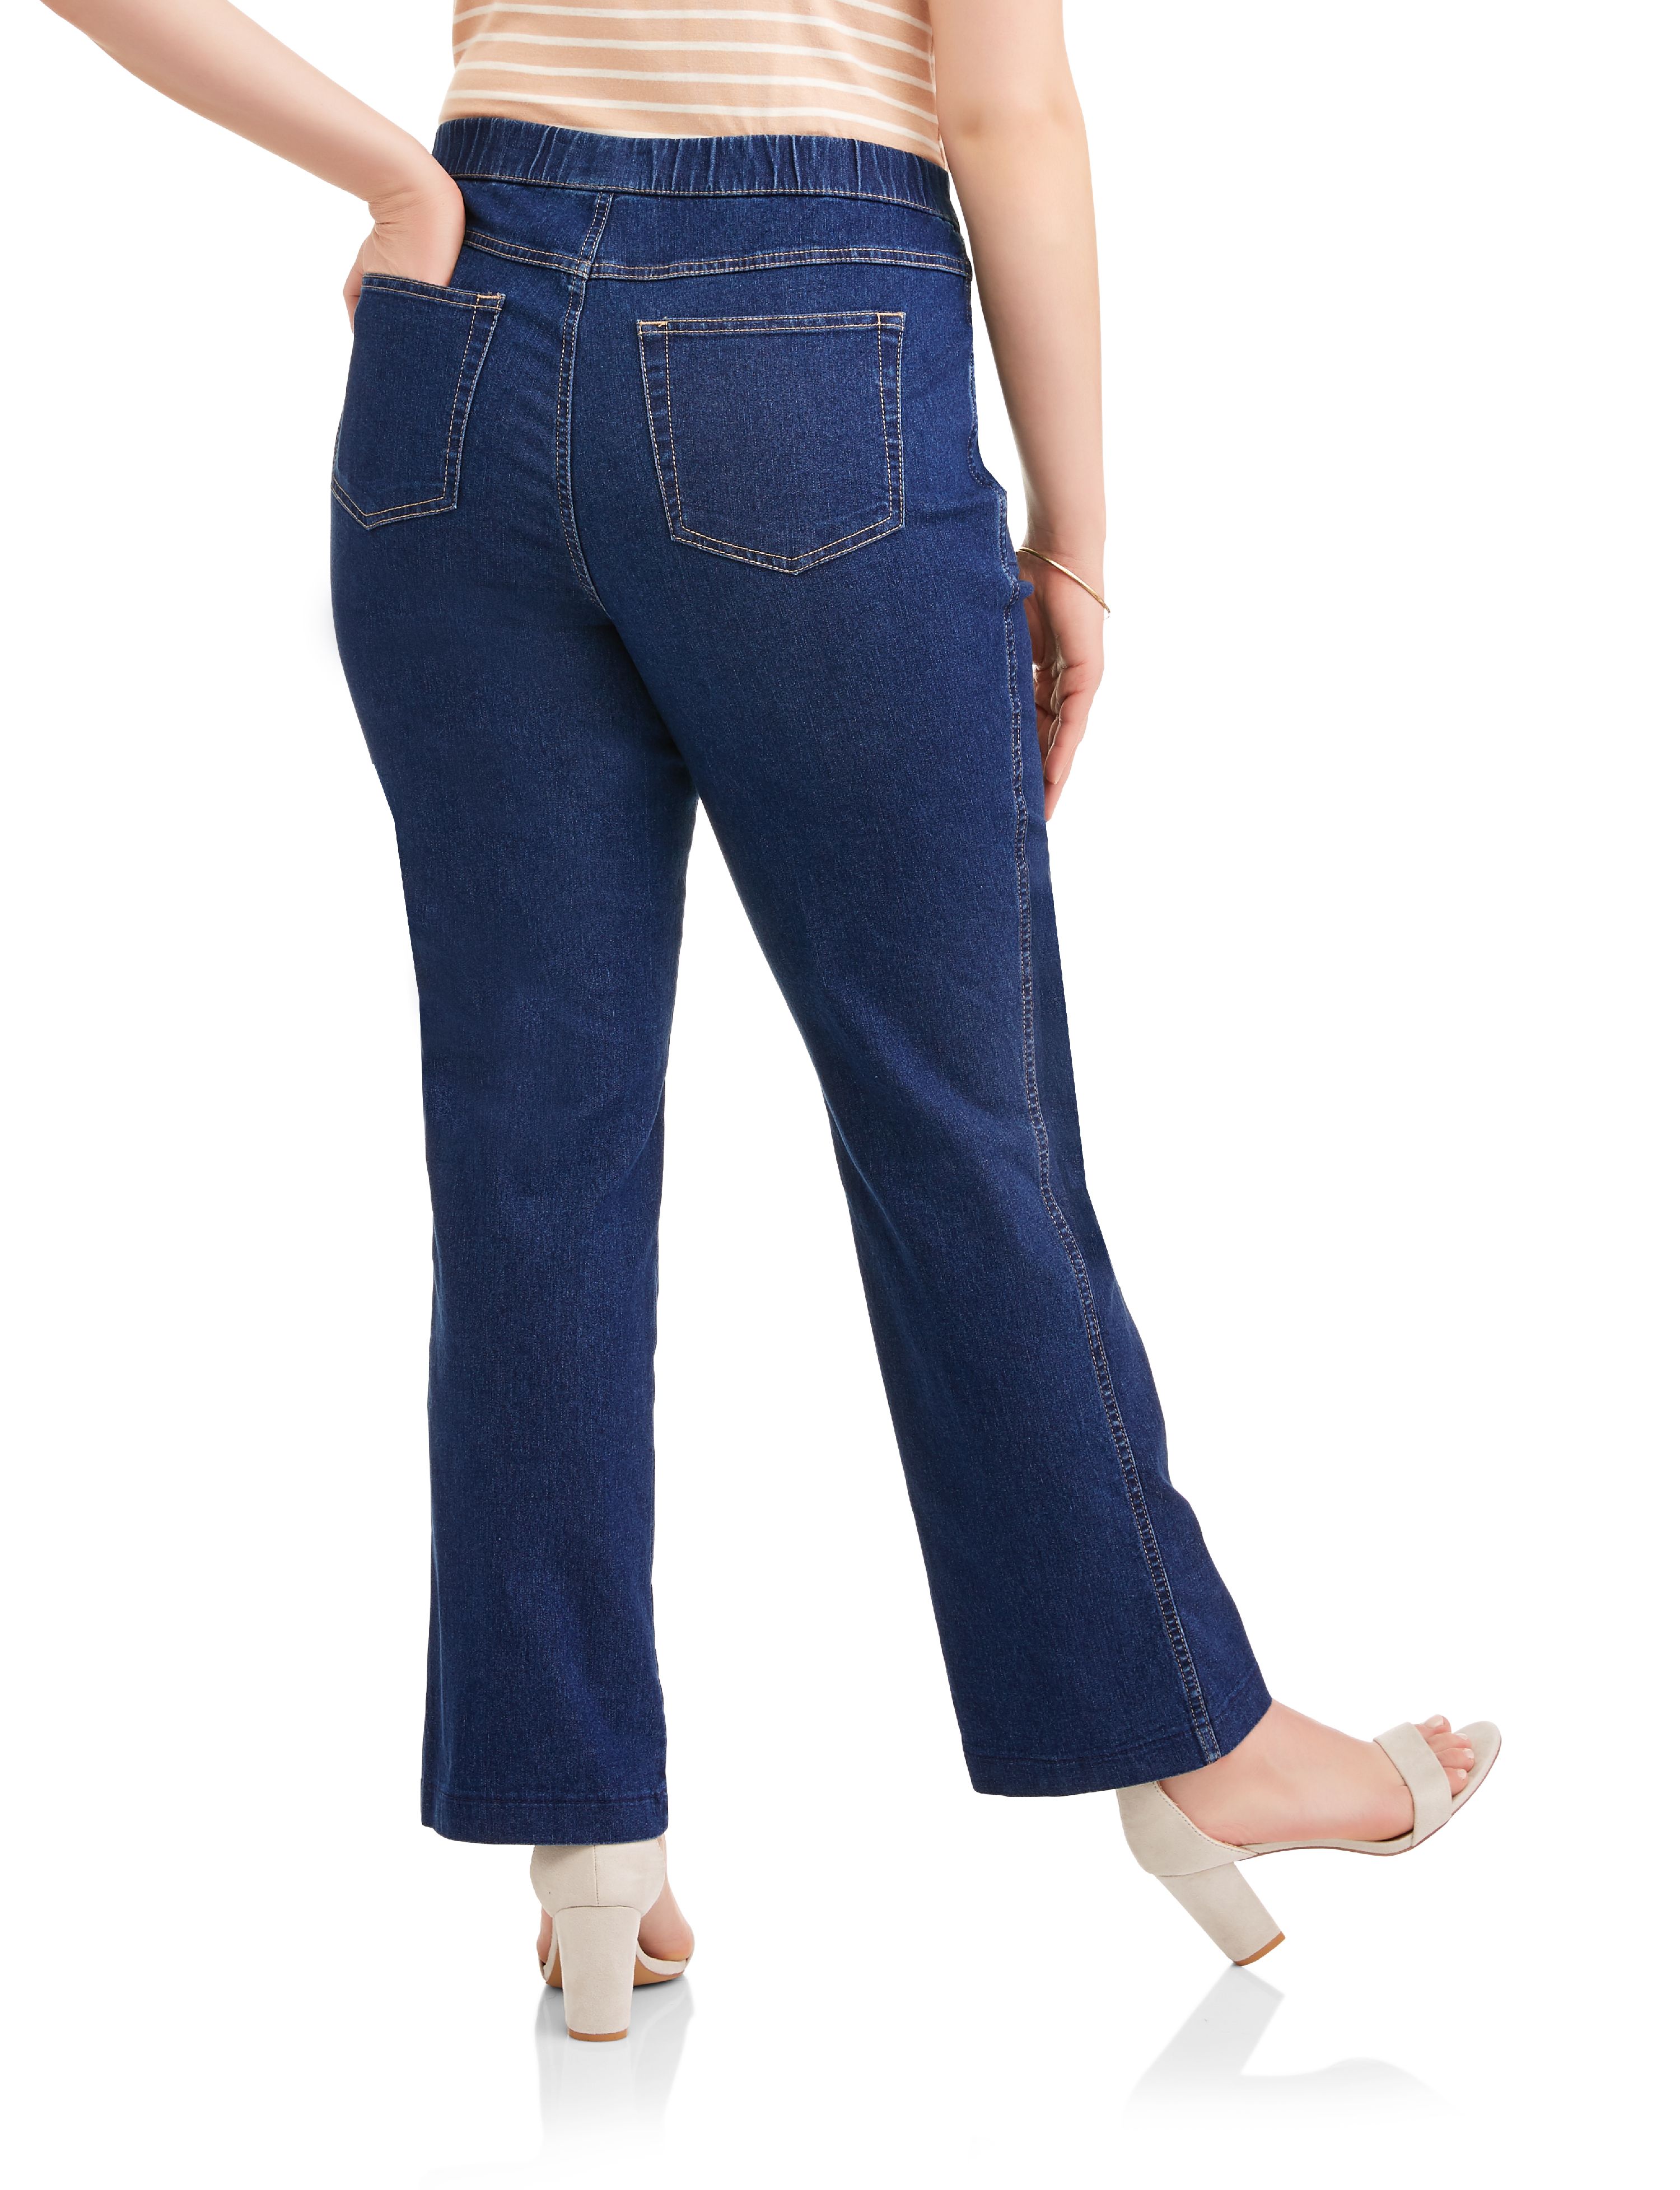 jms womens jeans